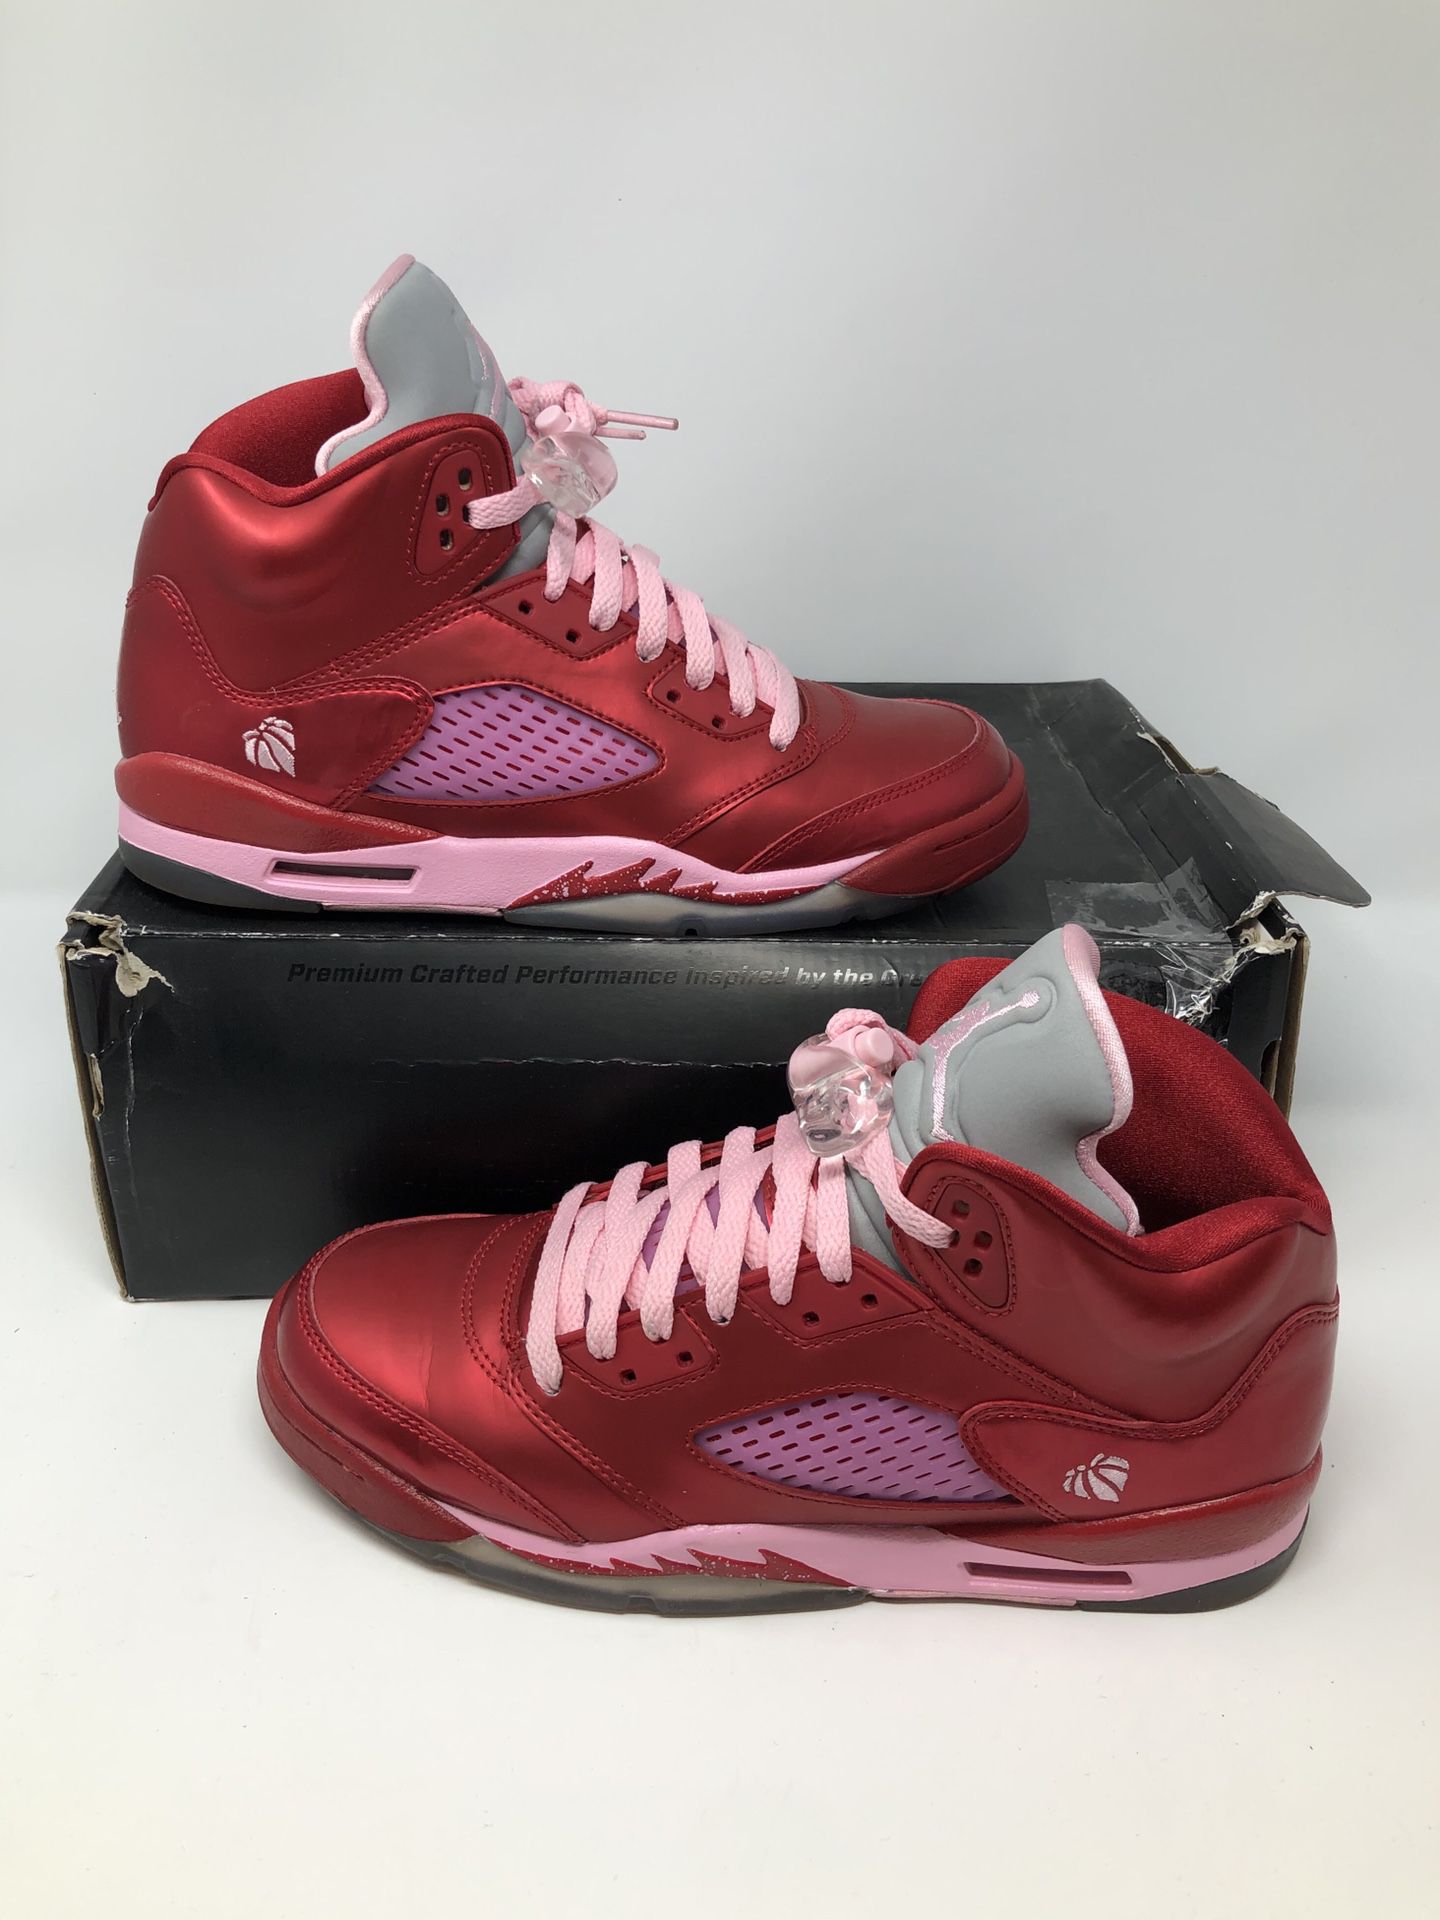 Air Jordan 5 GG ‘Valentine’s Day’ Size 7Y